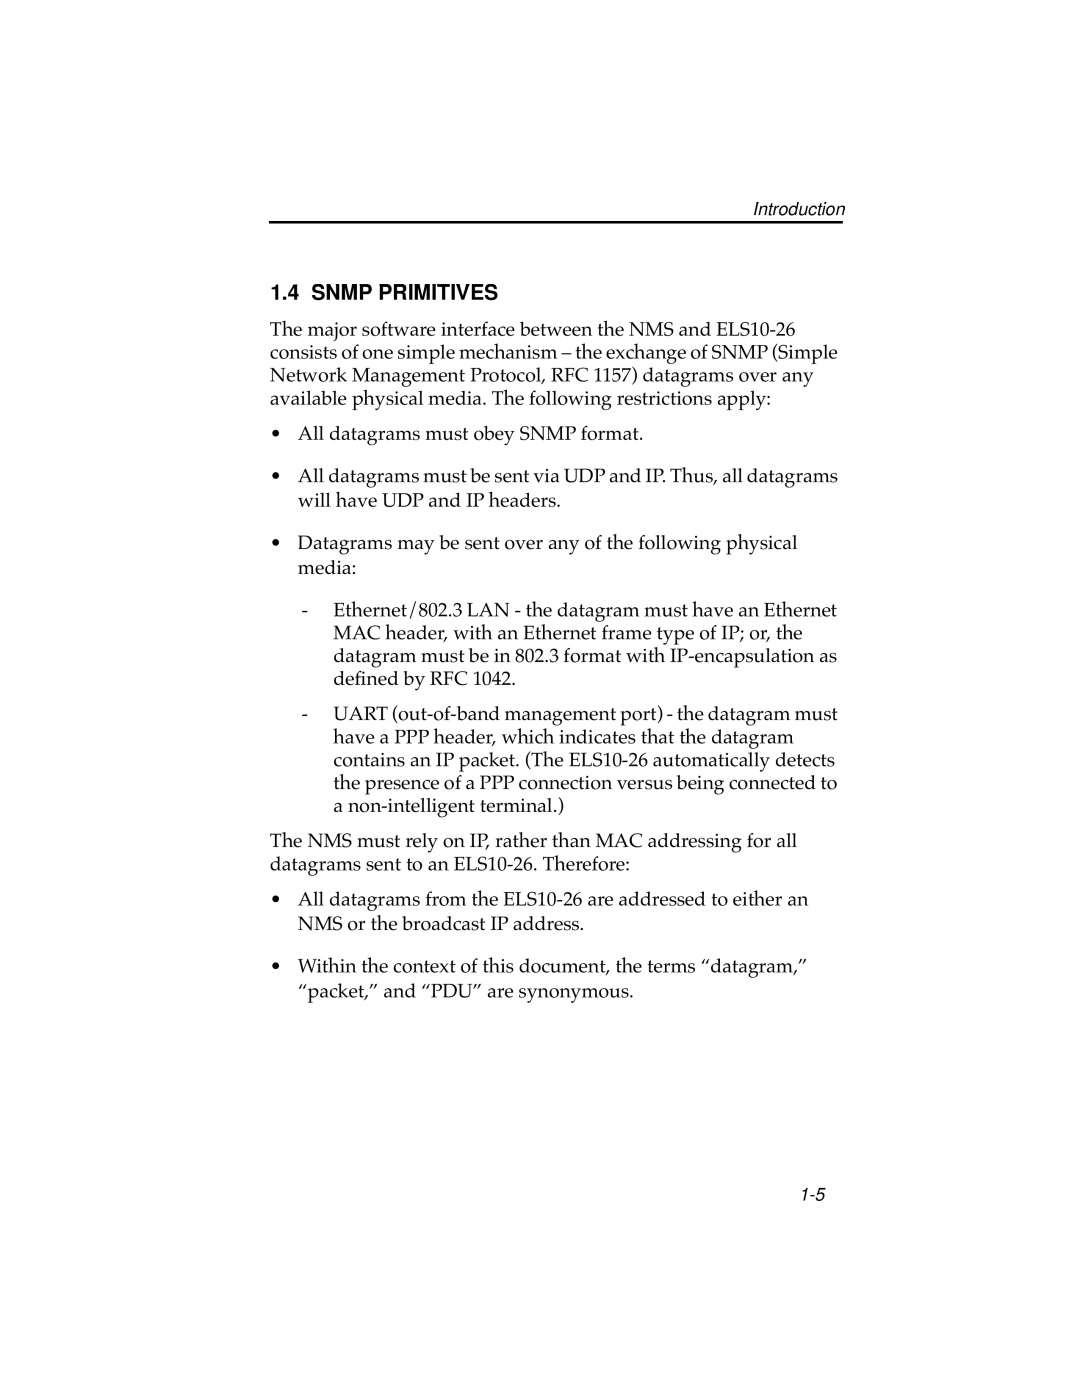 Cabletron Systems ELS10-26 manual Snmp Primitives 